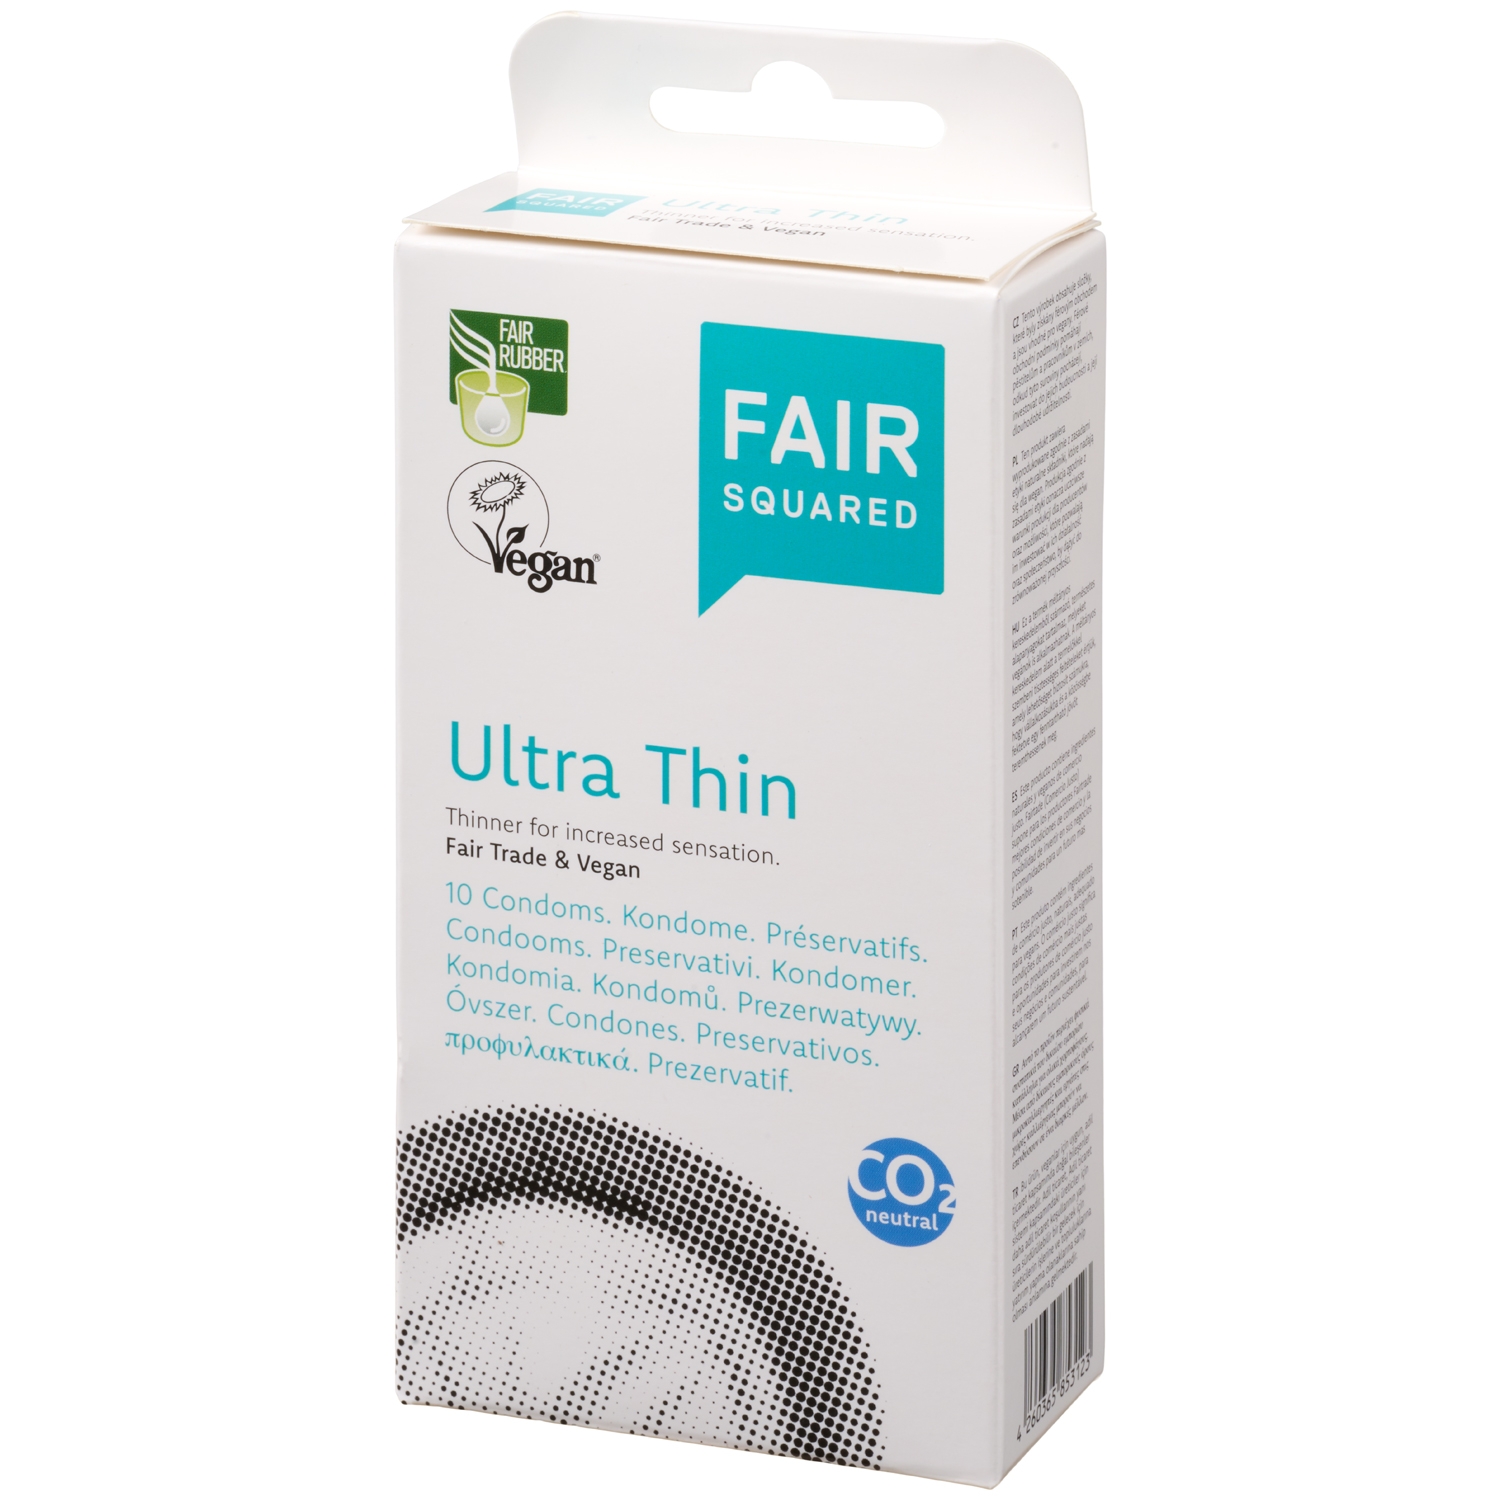 Fair Squared Fair Squared Ultra Thin Veganske Kondomer 10 stk - Klar